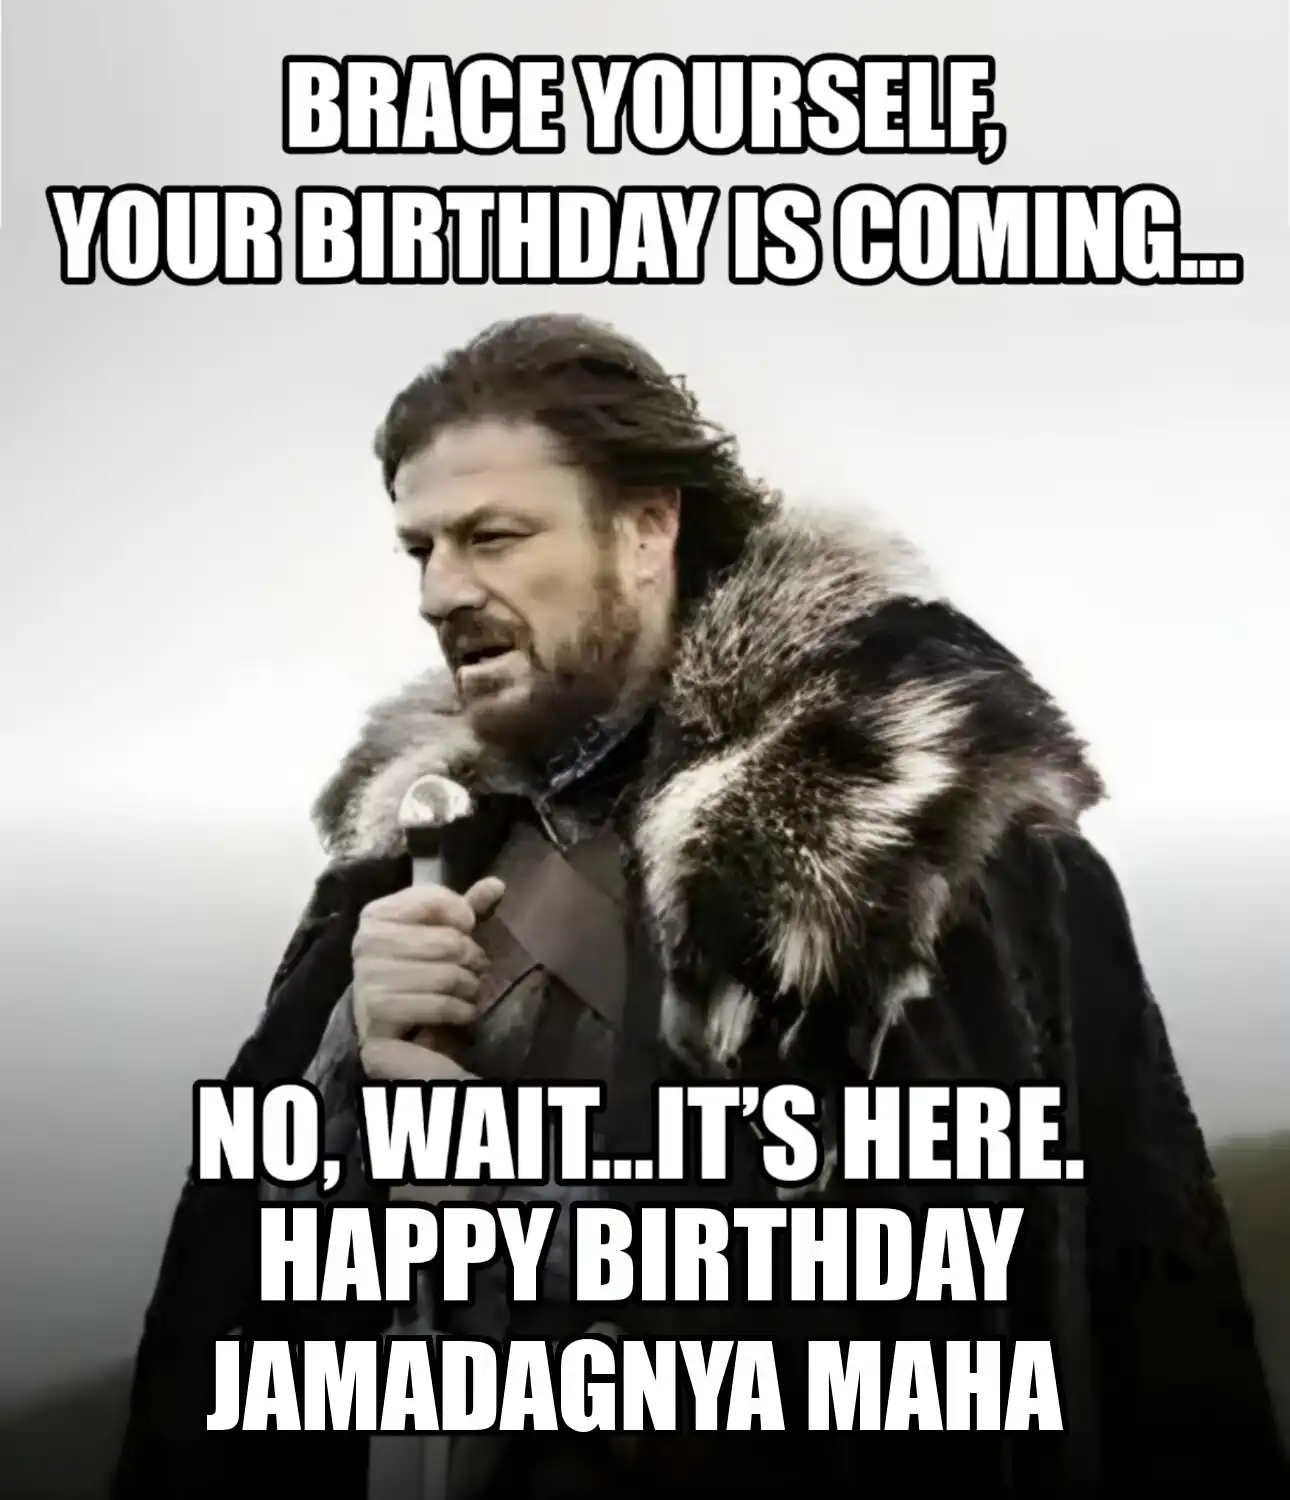 Happy Birthday Jamadagnya Maha Brace Yourself Your Birthday Is Coming Meme